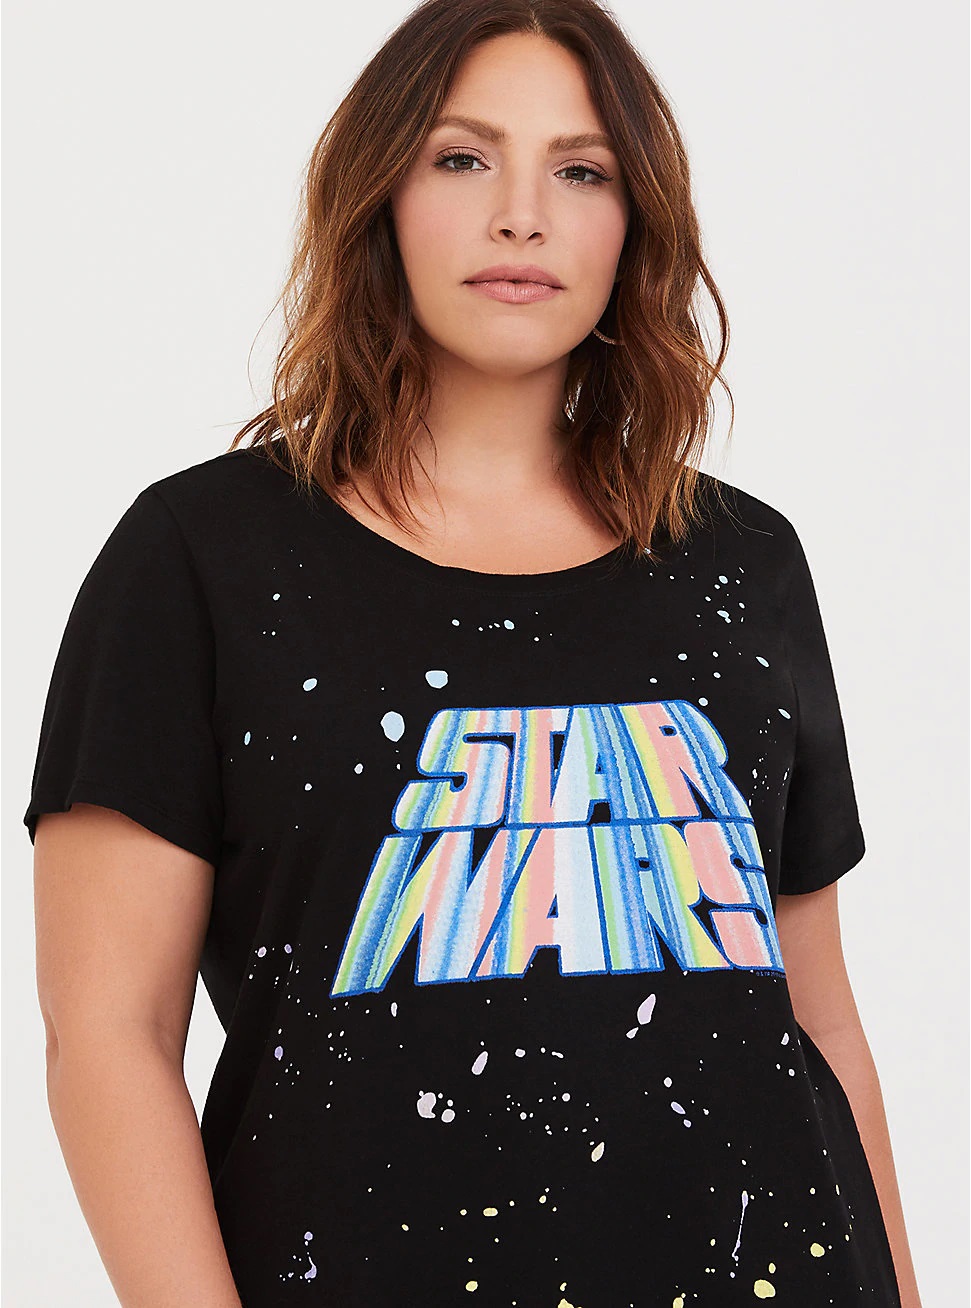 Women's Star Wars Fashion on Sale at Torrid - One Day 35% off Flash Sale